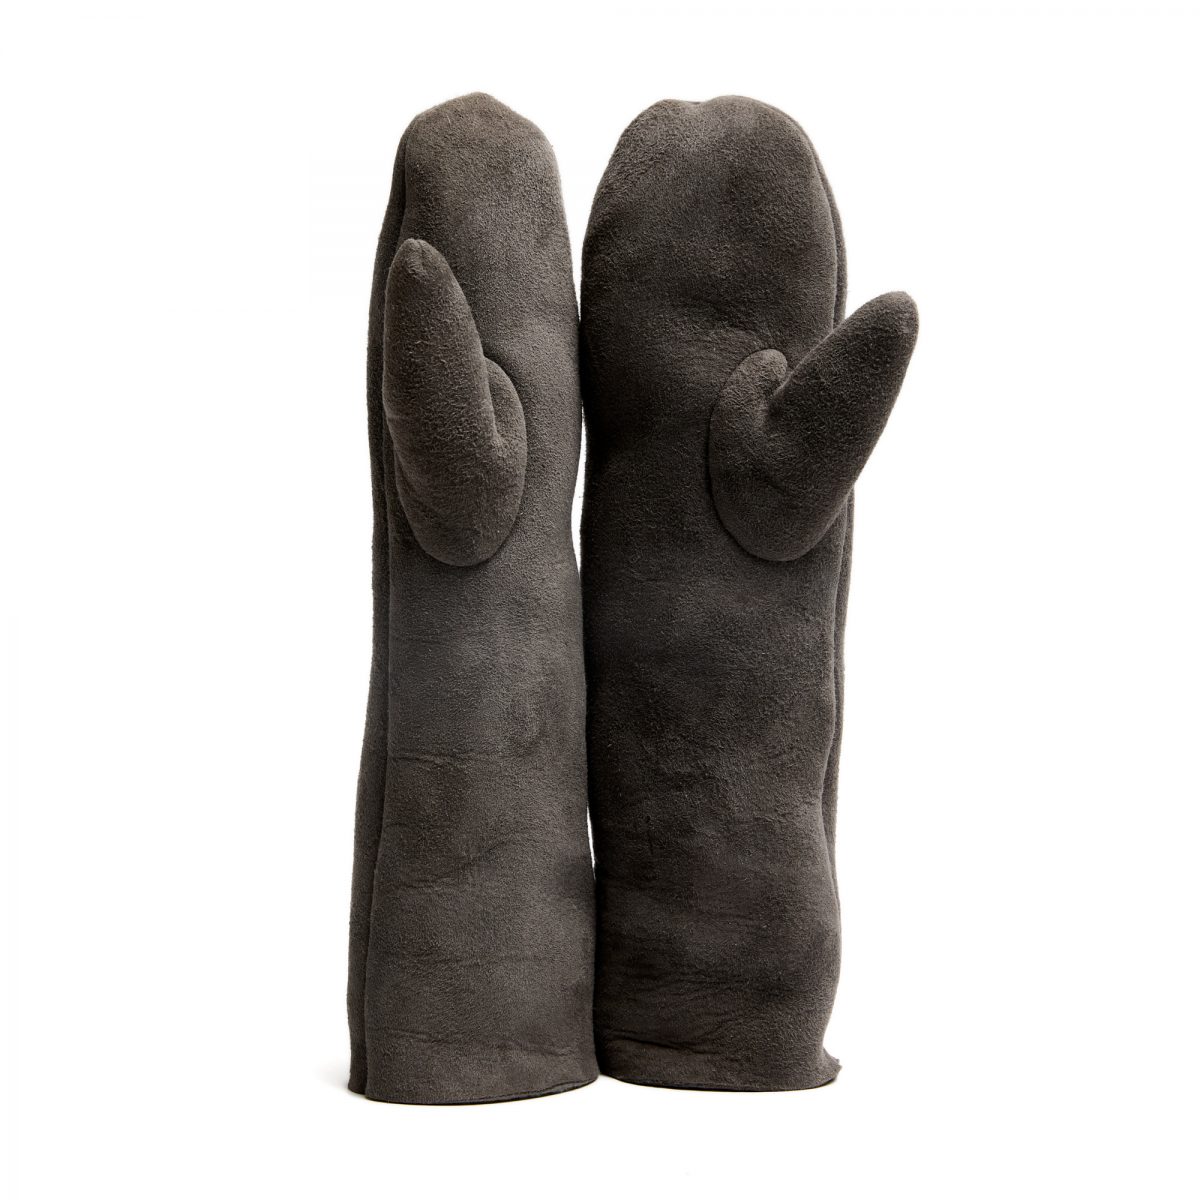 Wool gloves by Studio Rosanne Bergsma